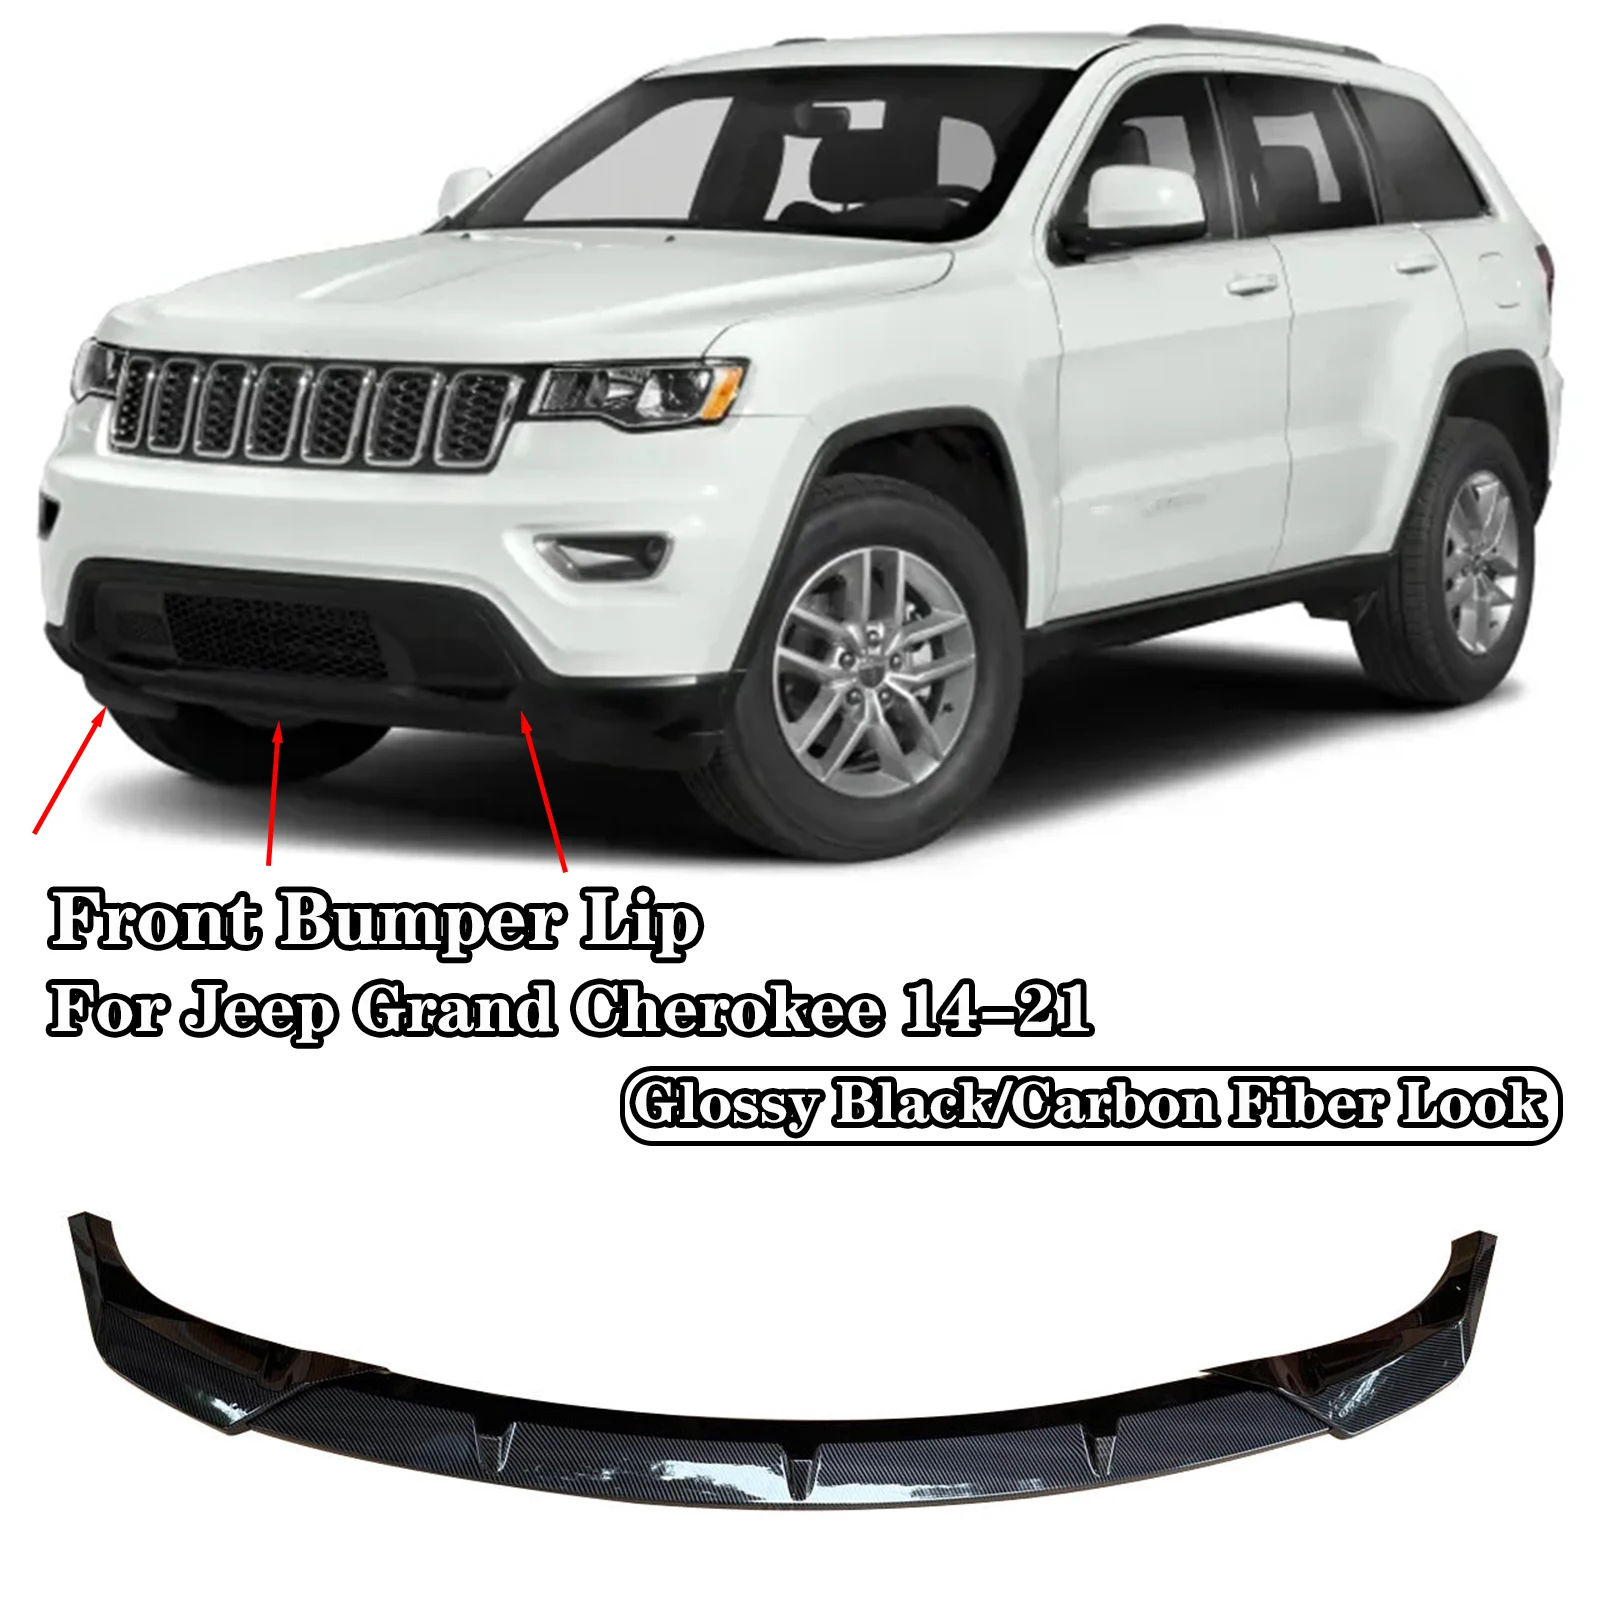 

Front Bumper Lip Spoiler For Jeep Grand Cherokee Base Version 2014-21 Carbon Fiber Look Glossy Black Matte Black Lower Body Kit